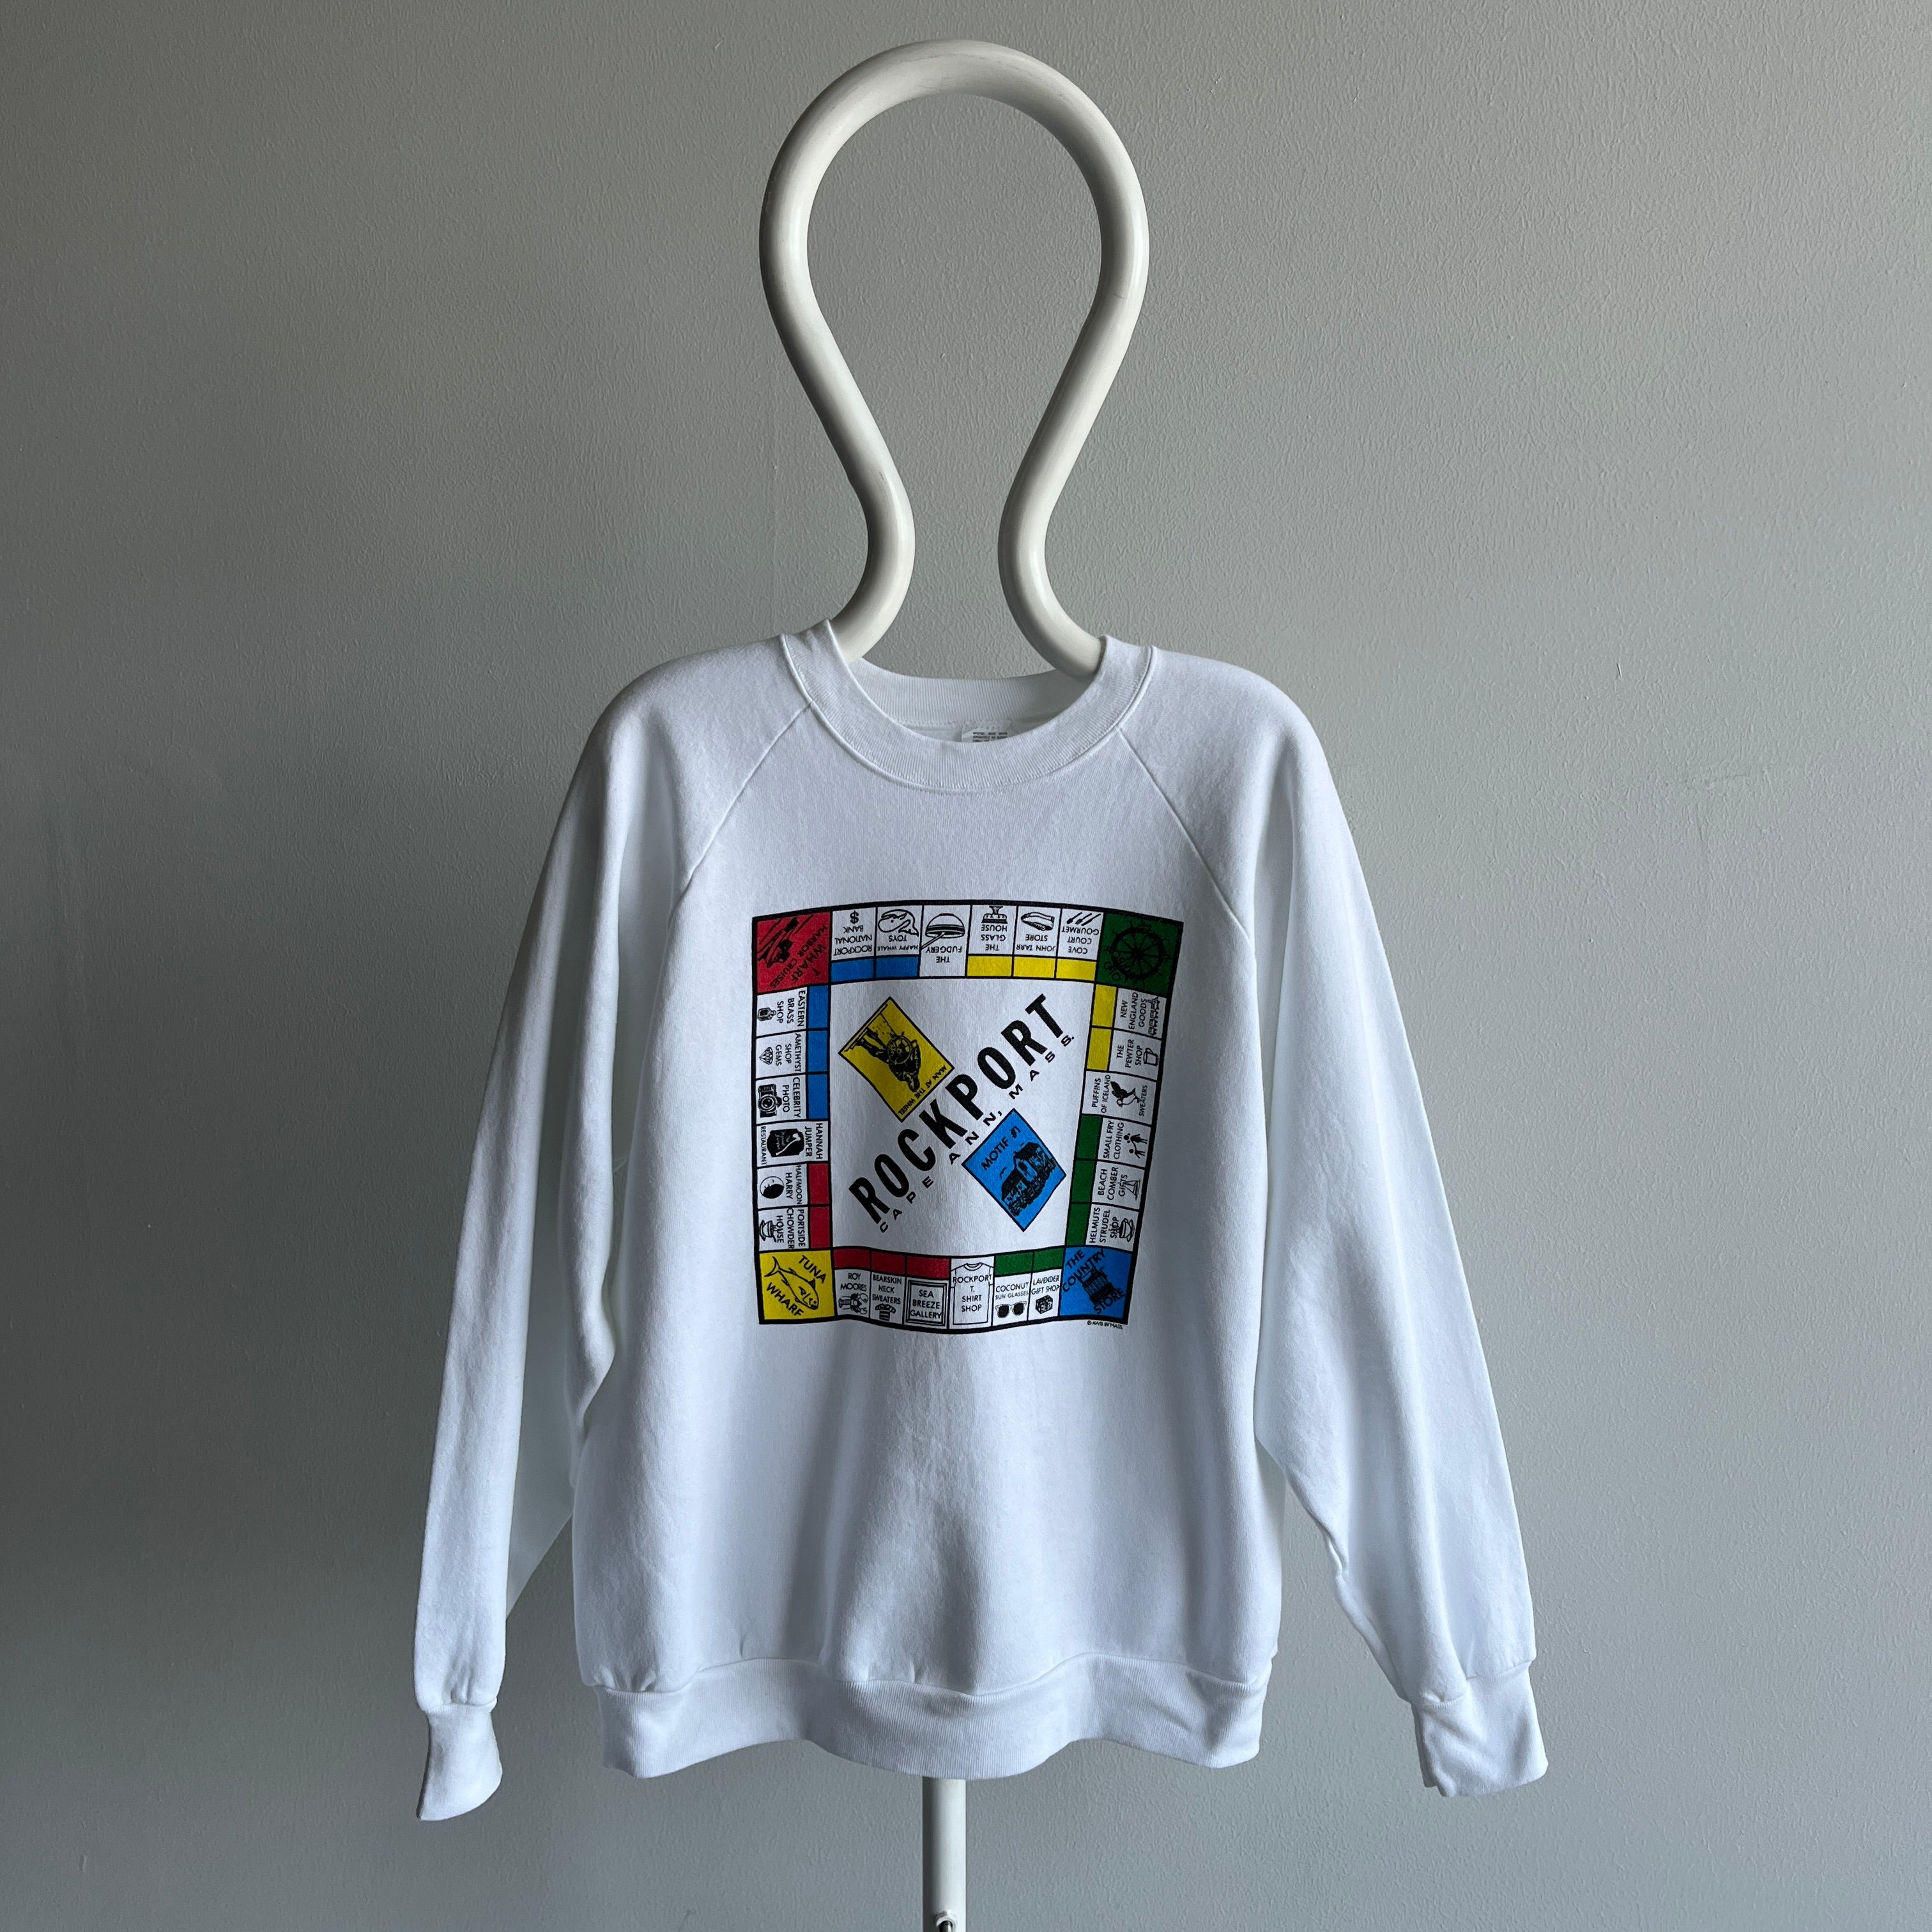 1989 Rockport, Cape Ann, Mass. Monopoly Spoof Tourist Sweatshirt - WOW